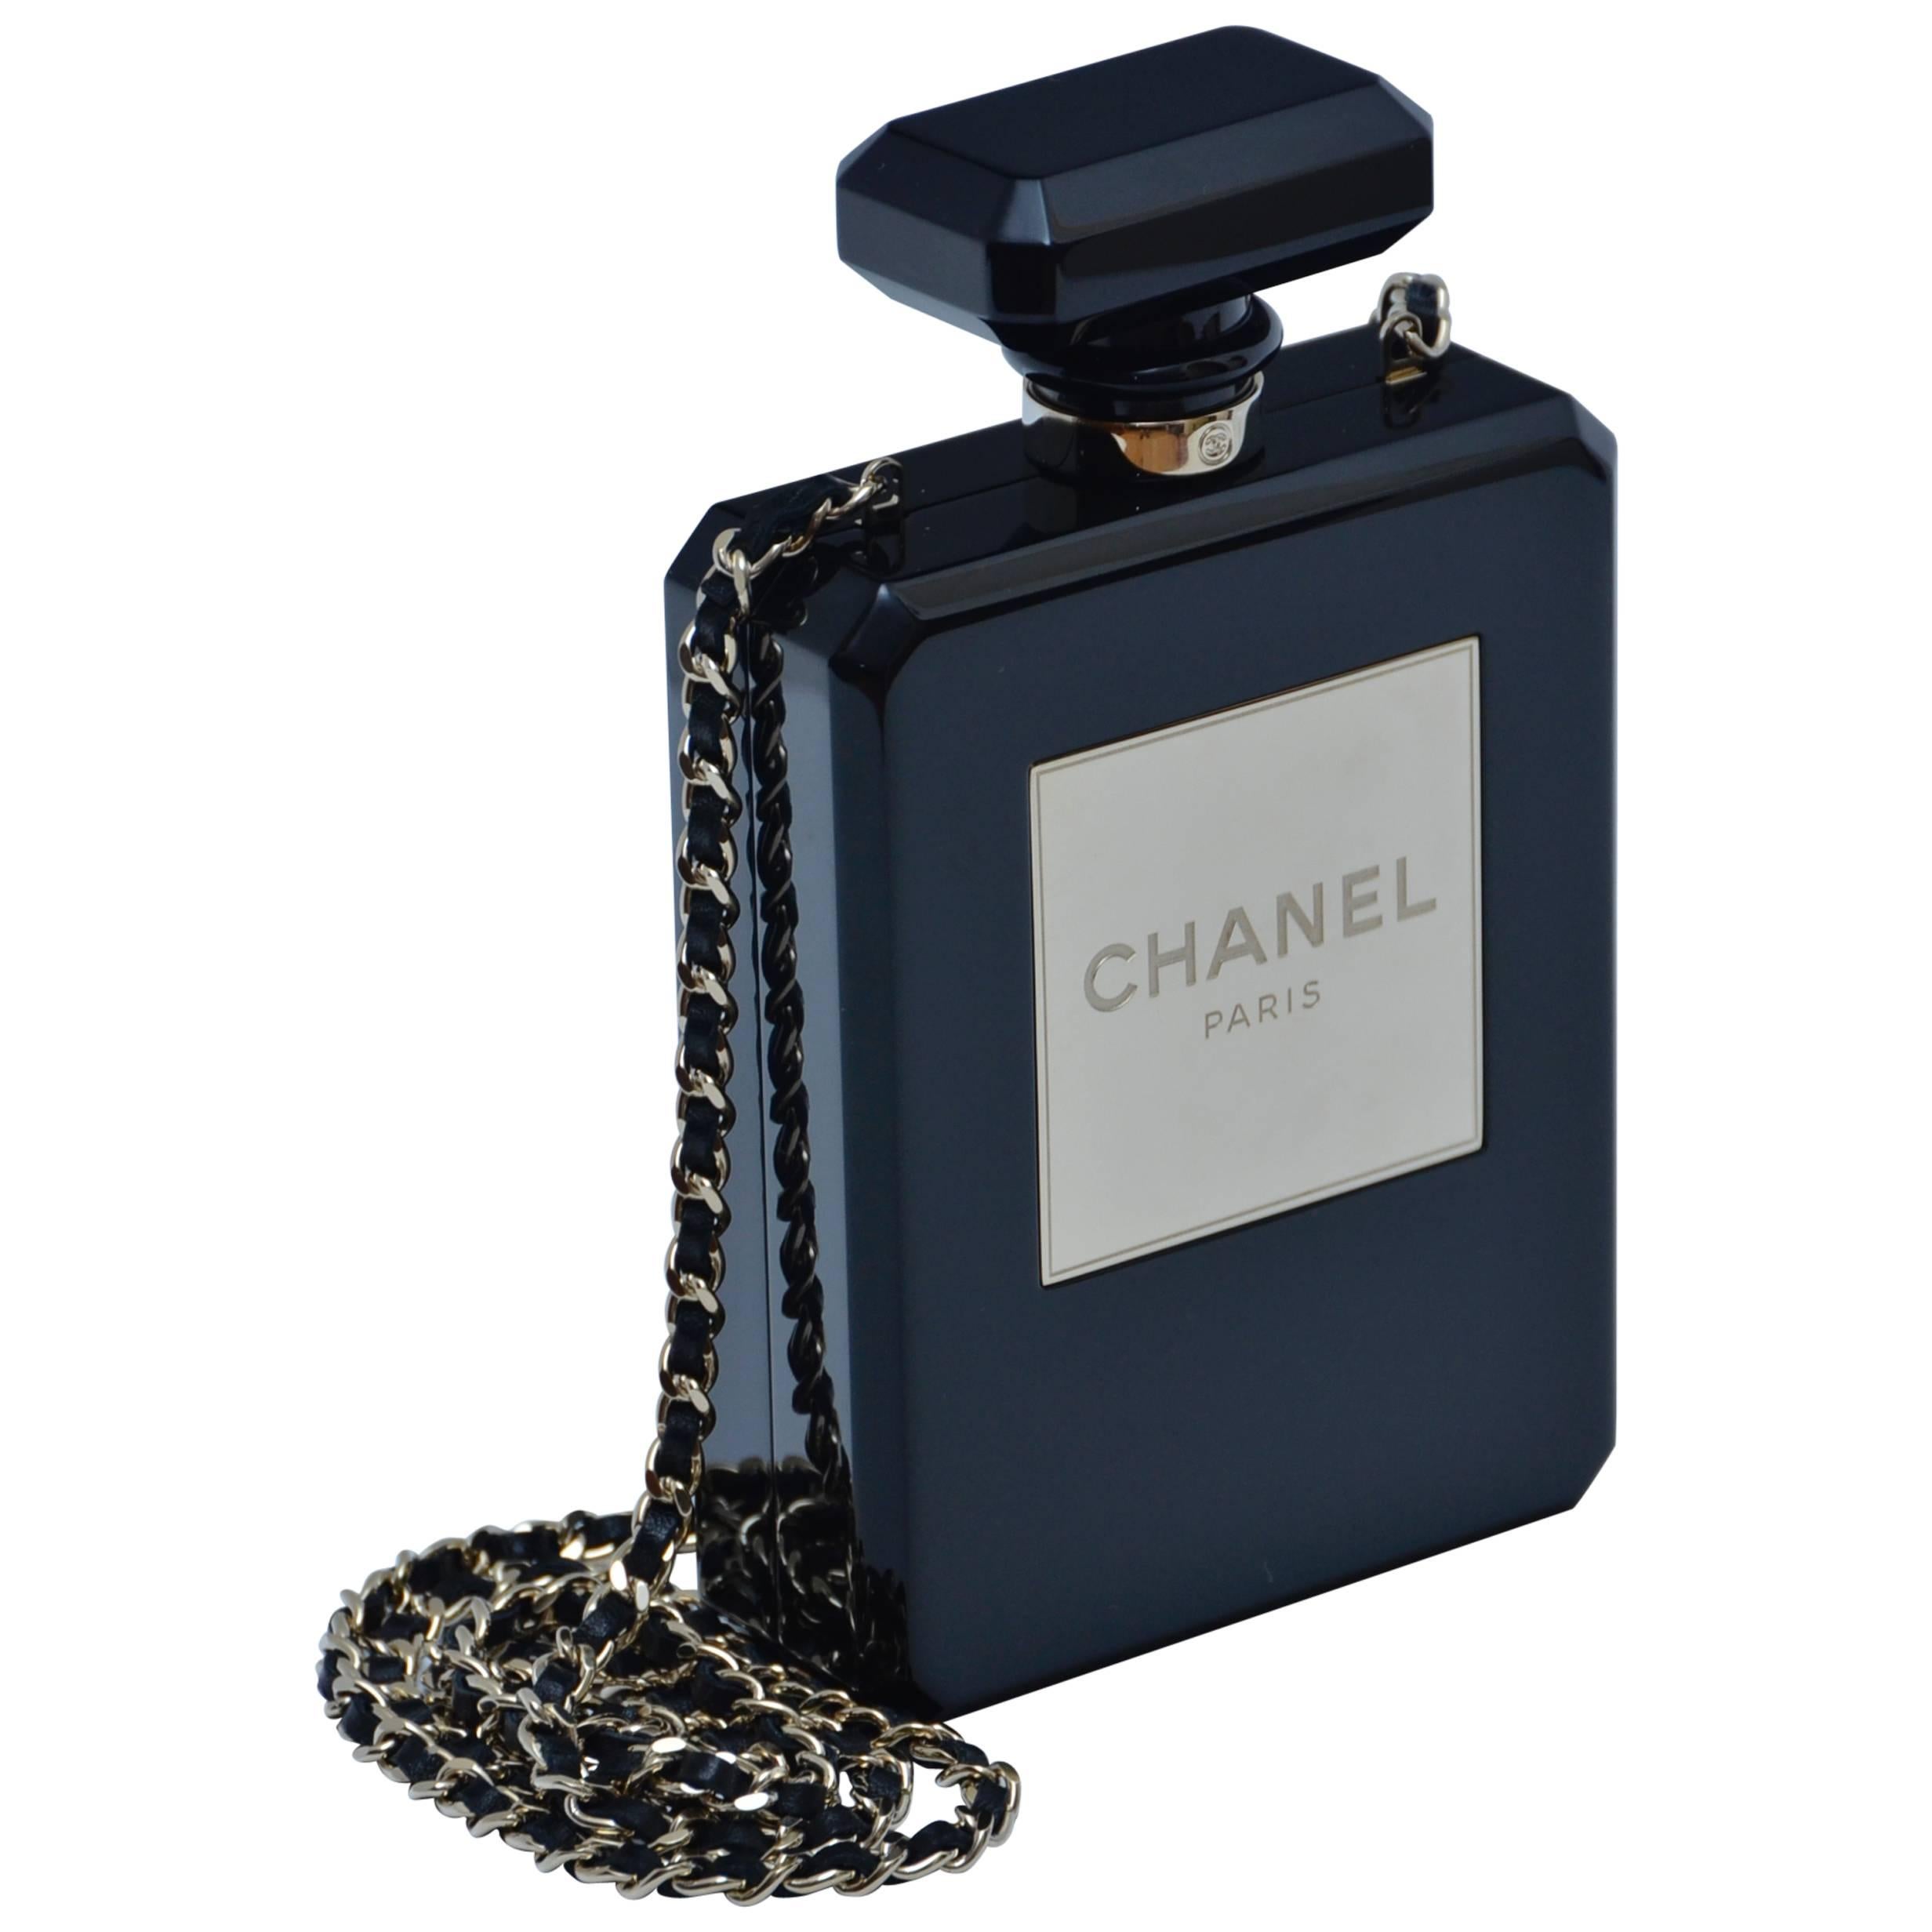 CHANEL Limited Edition Black Handbag Clutch Runway  Perfume Bottle Clutch   Mint